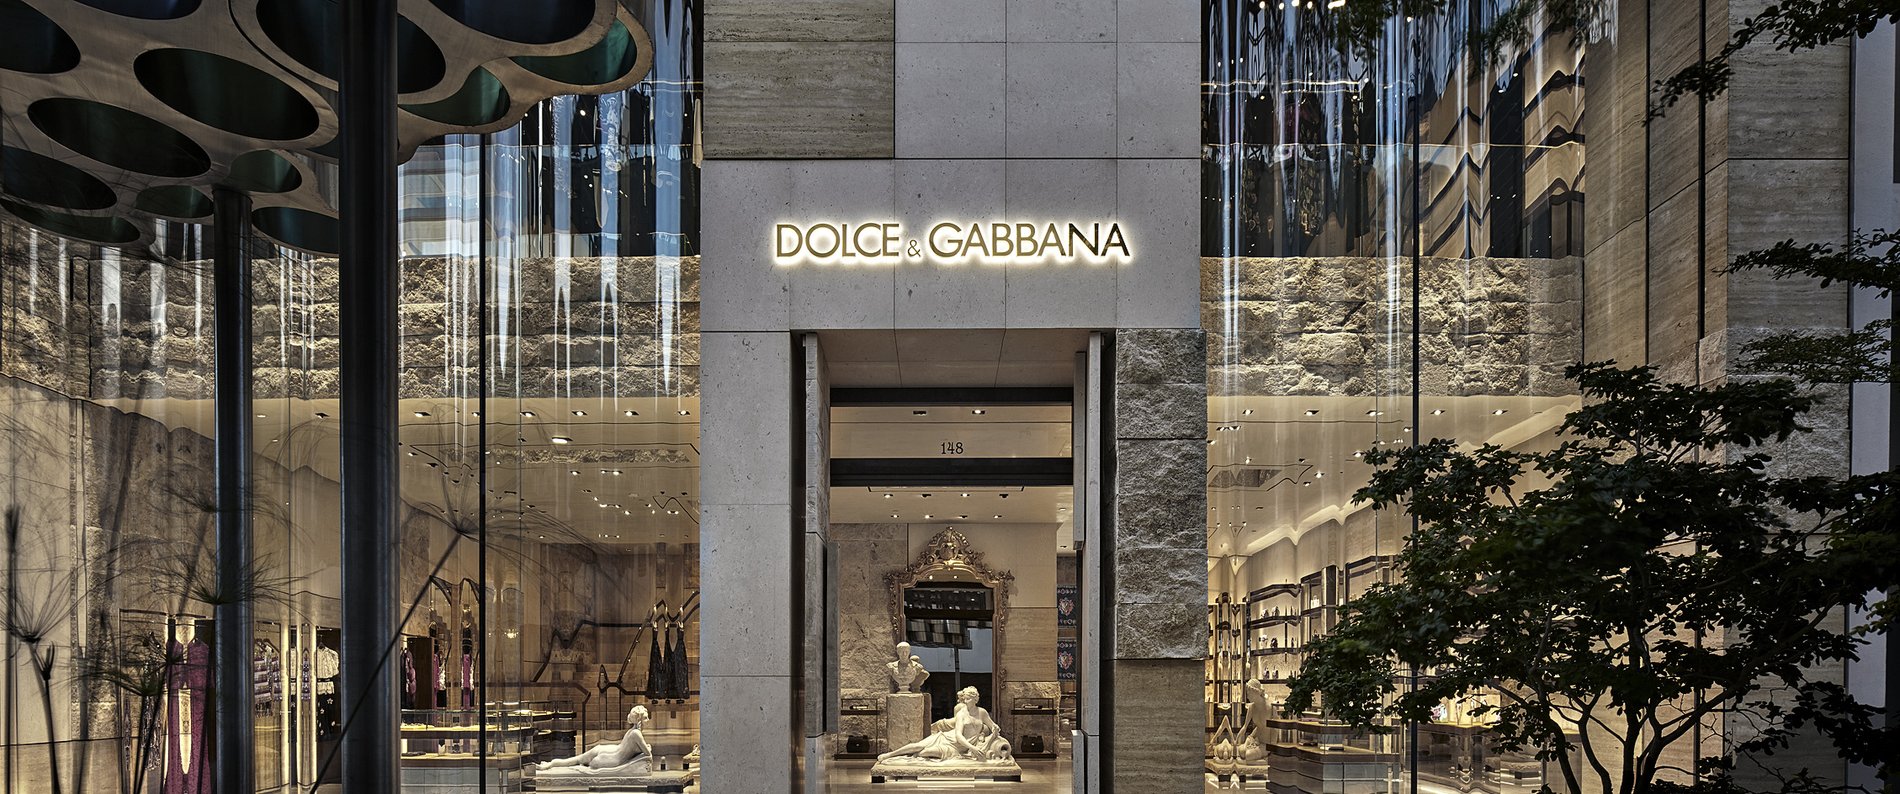 Descubrir 30+ imagen dolce and gabbana galleria mall